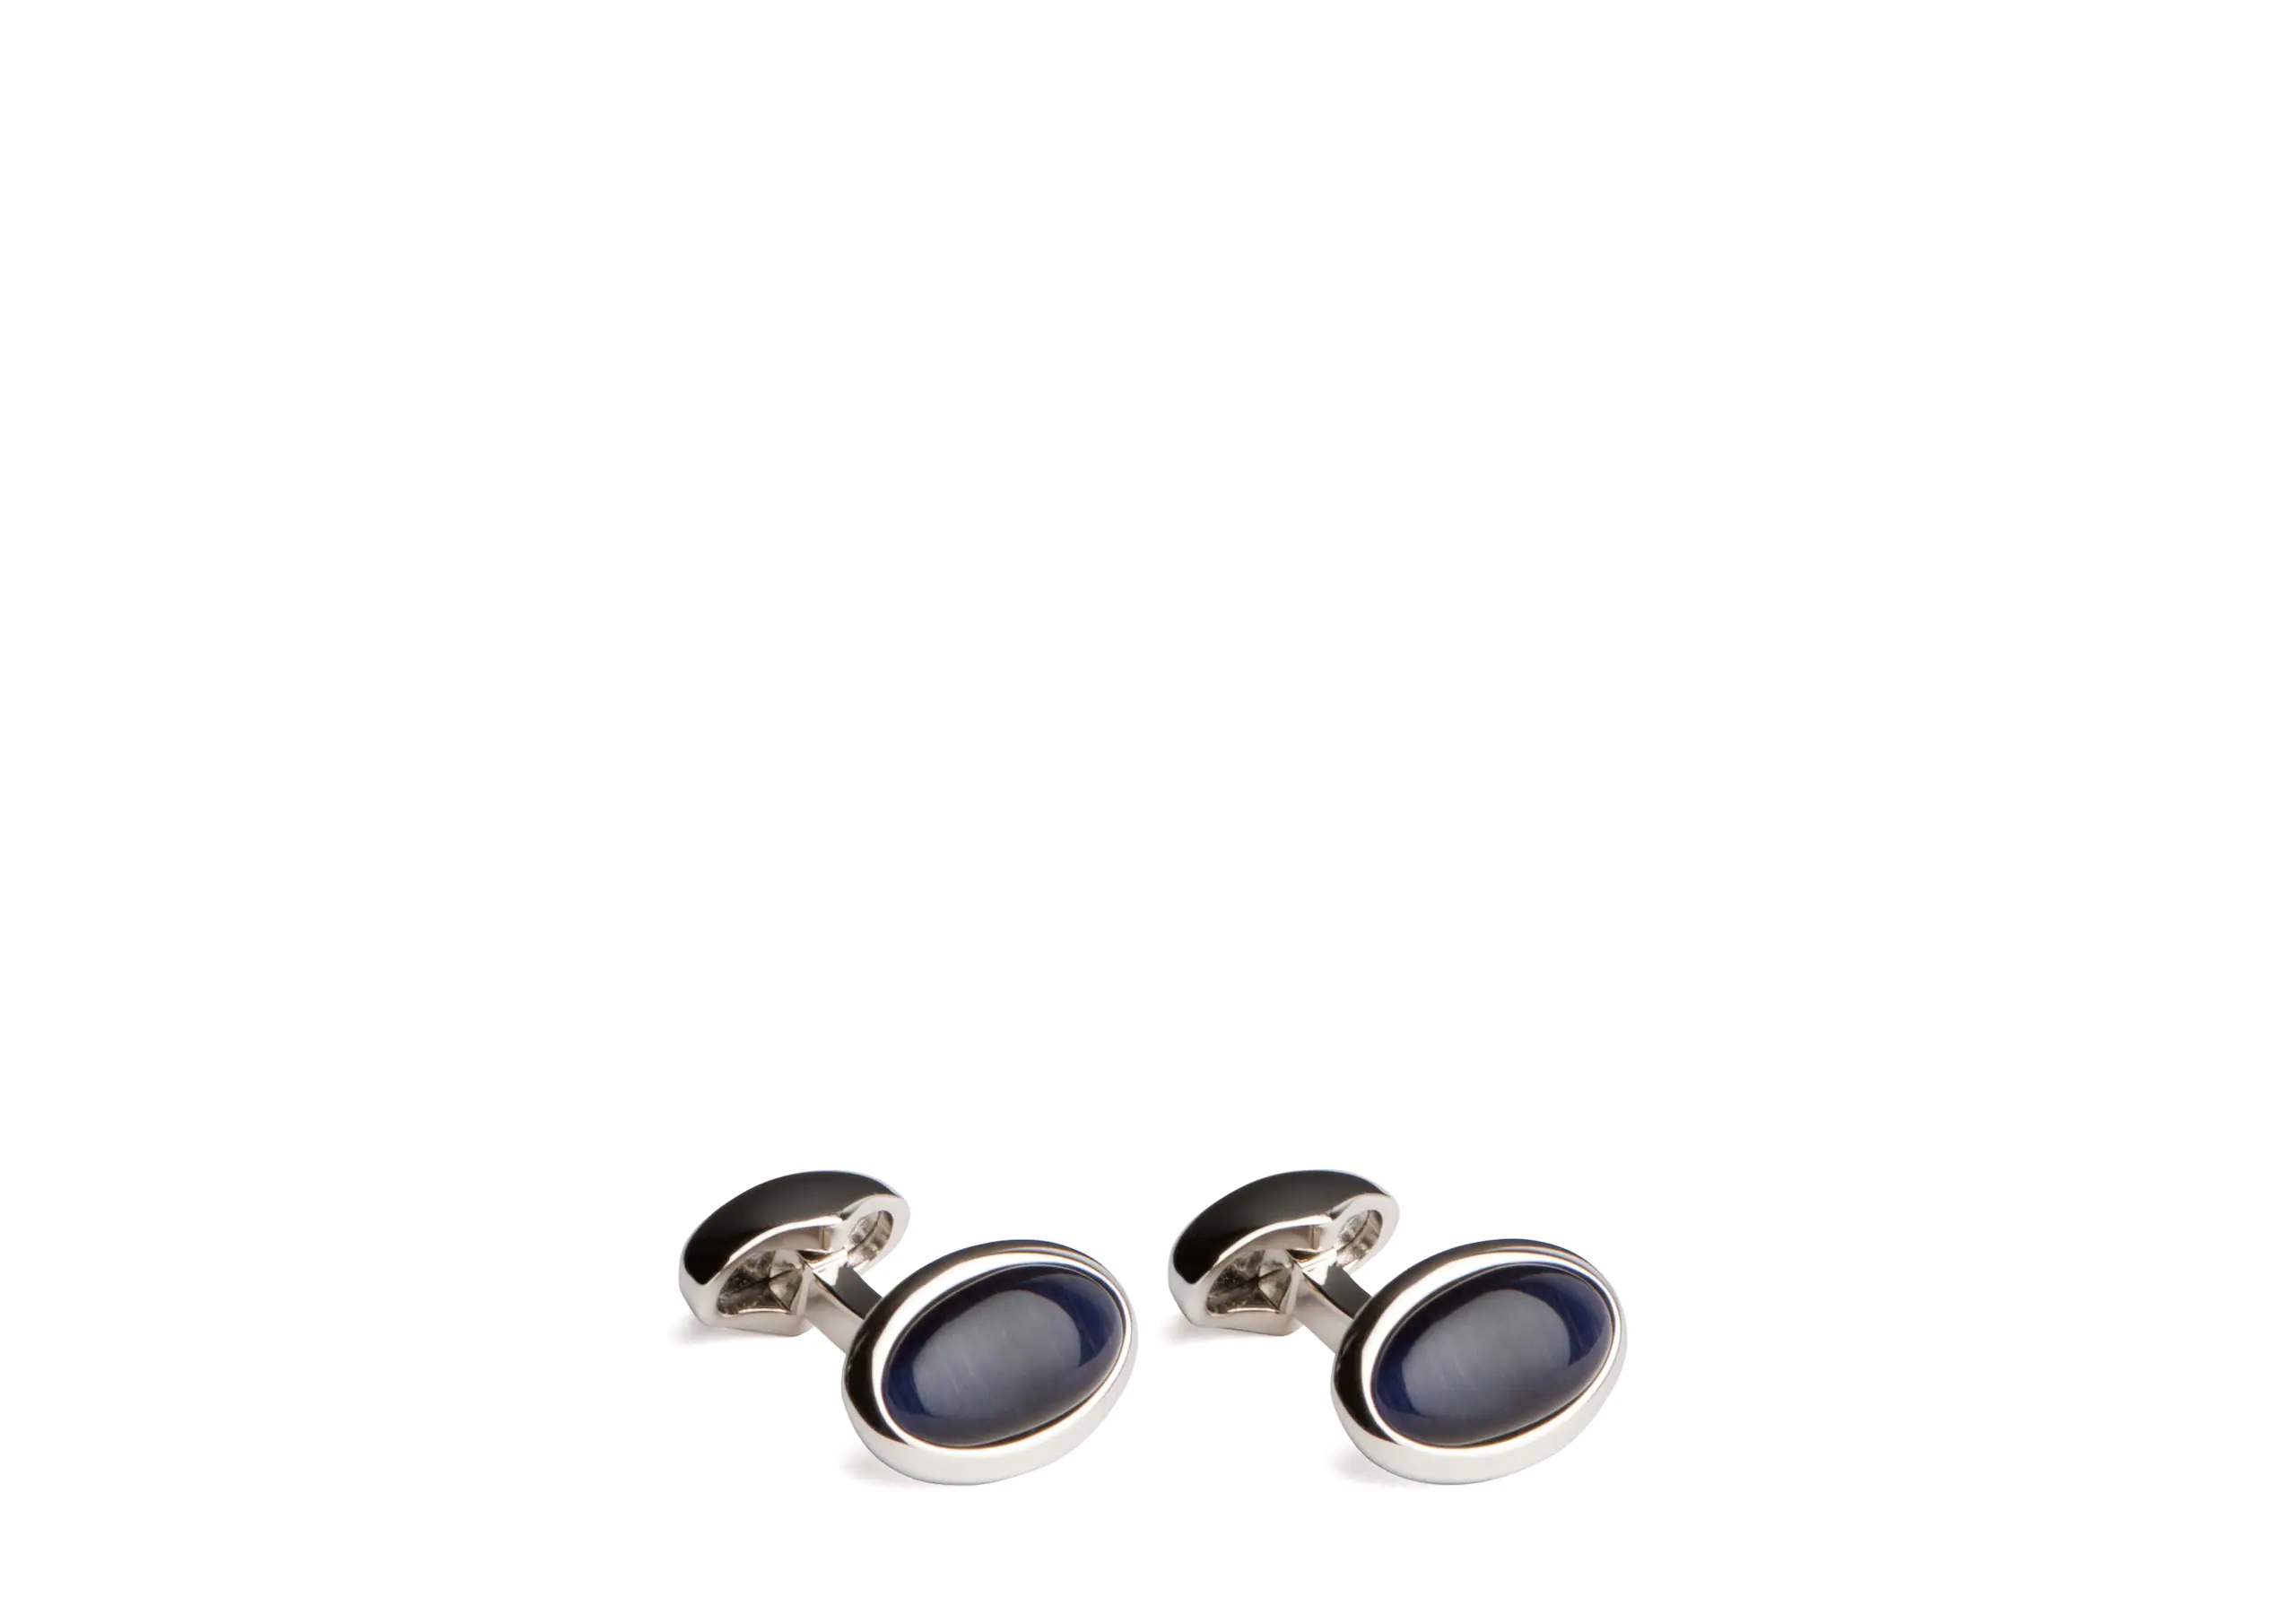 Oval pumice cufflink
Pumice & Rhodium Plated Oval Blue - 1